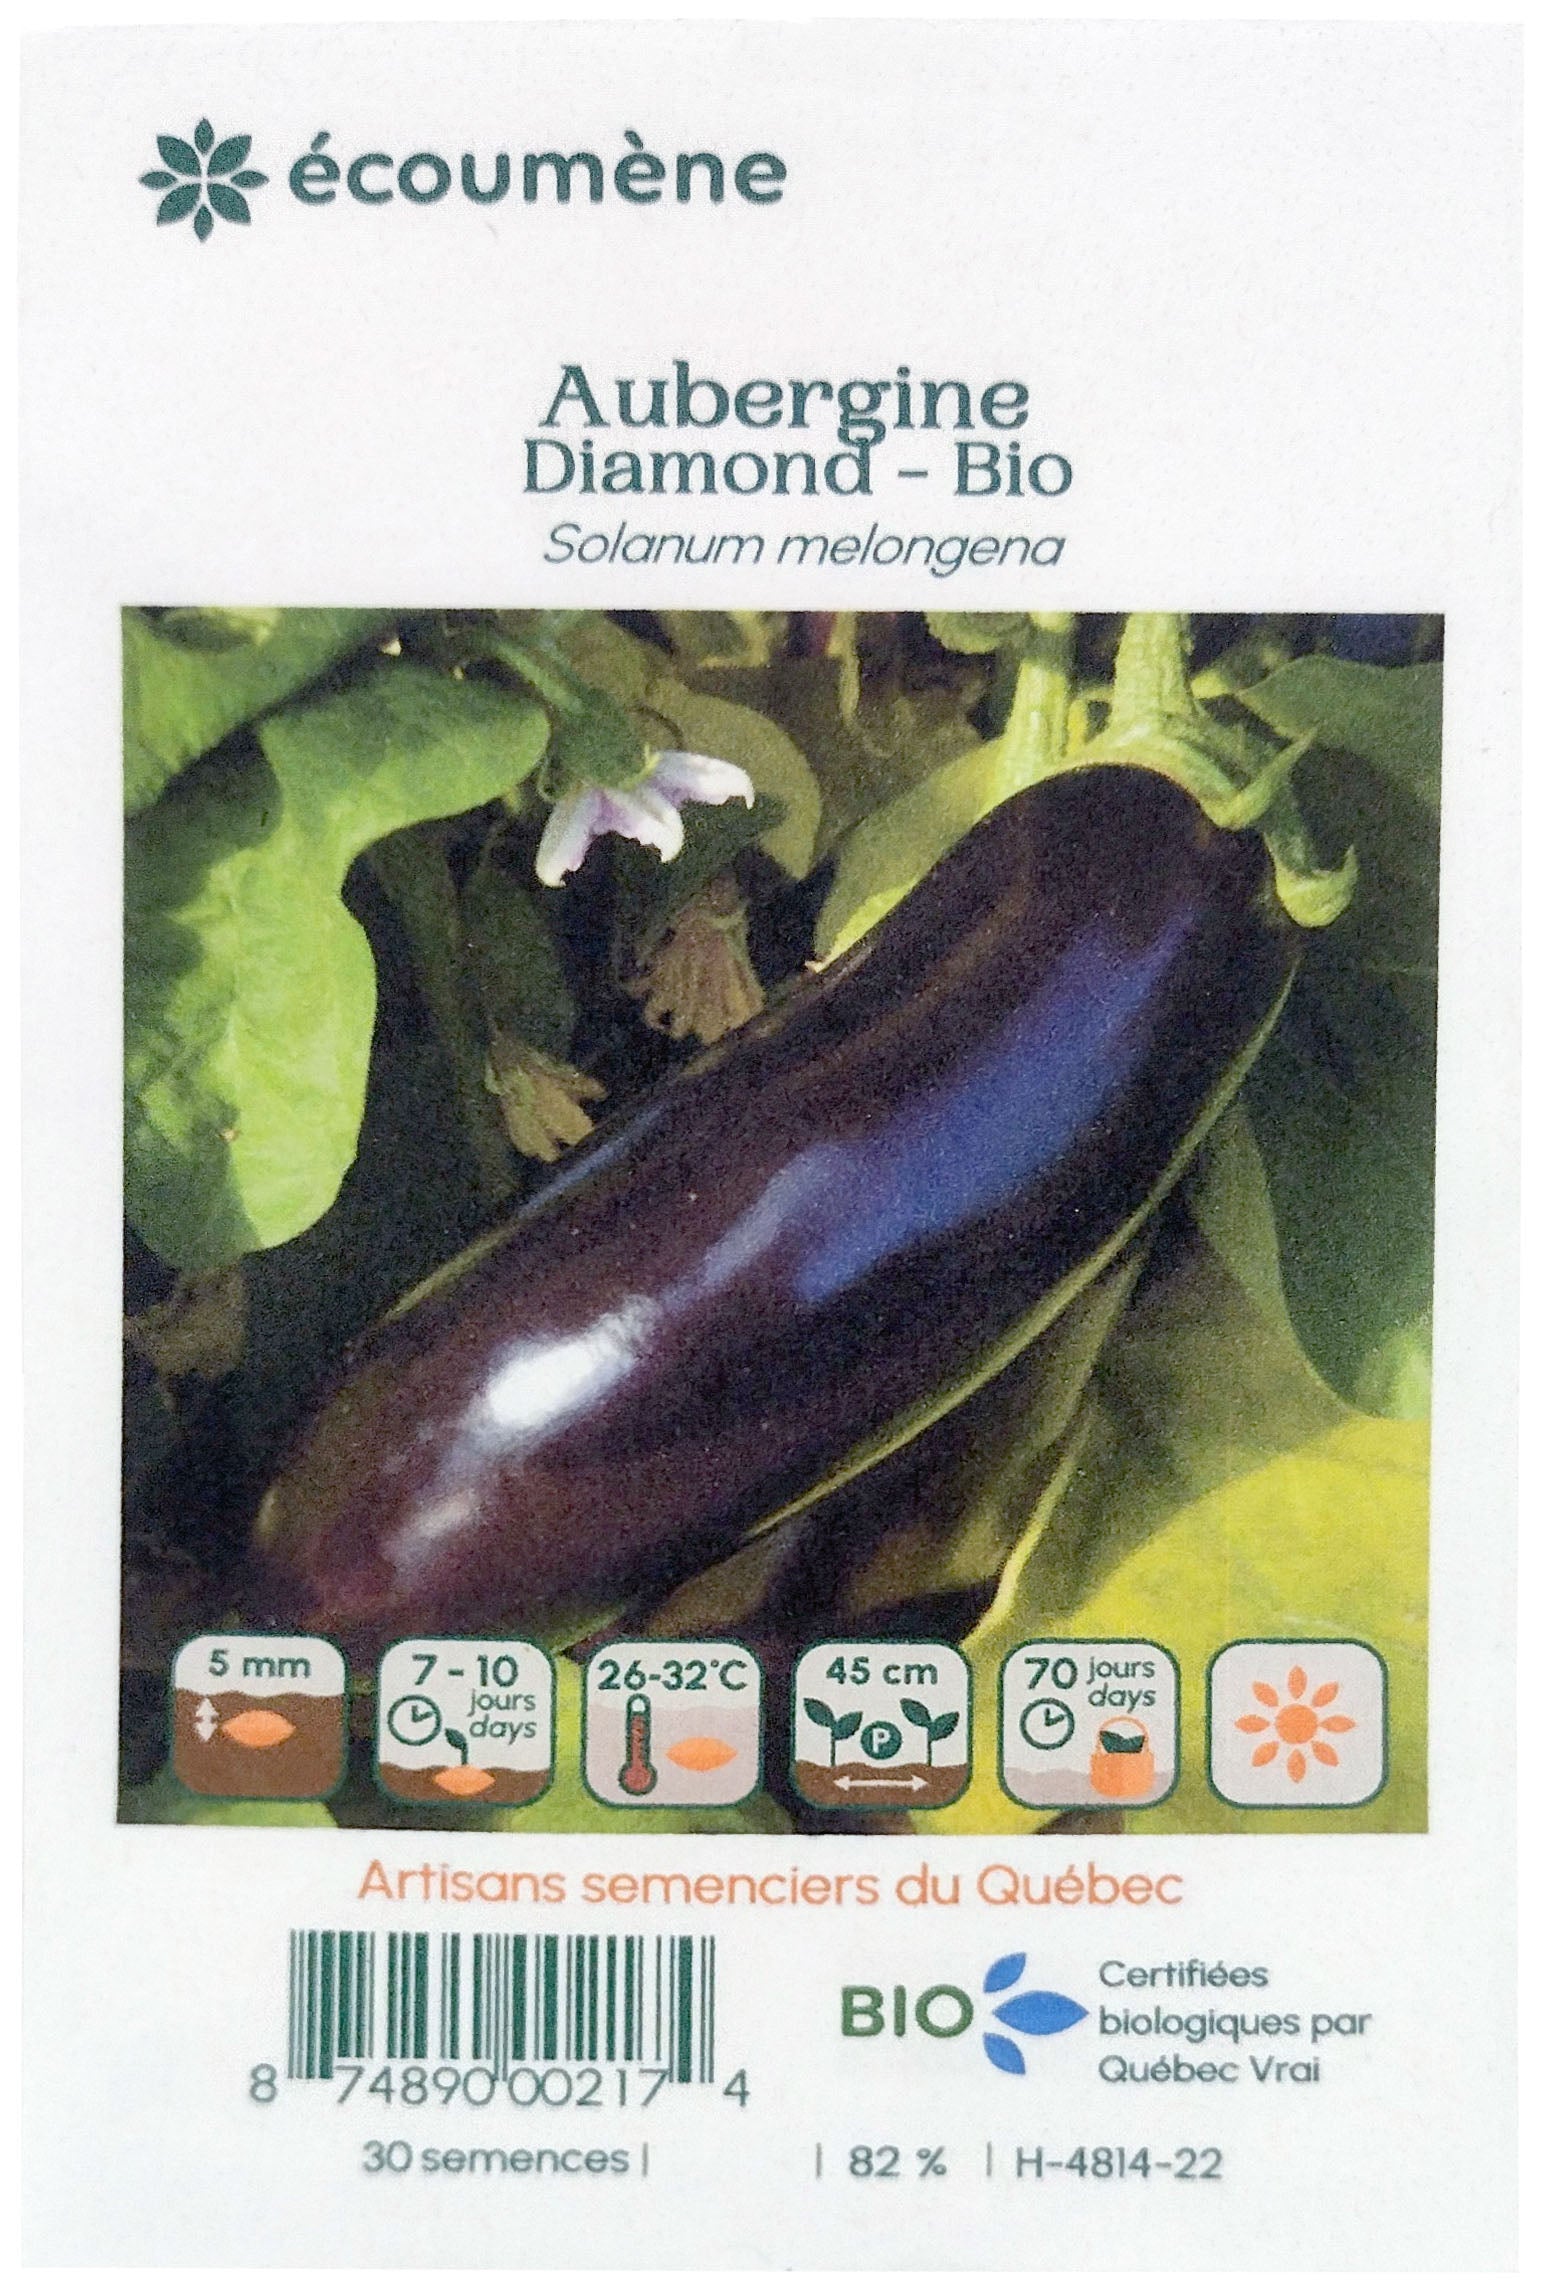 Semence aubergine diamond bio (un)